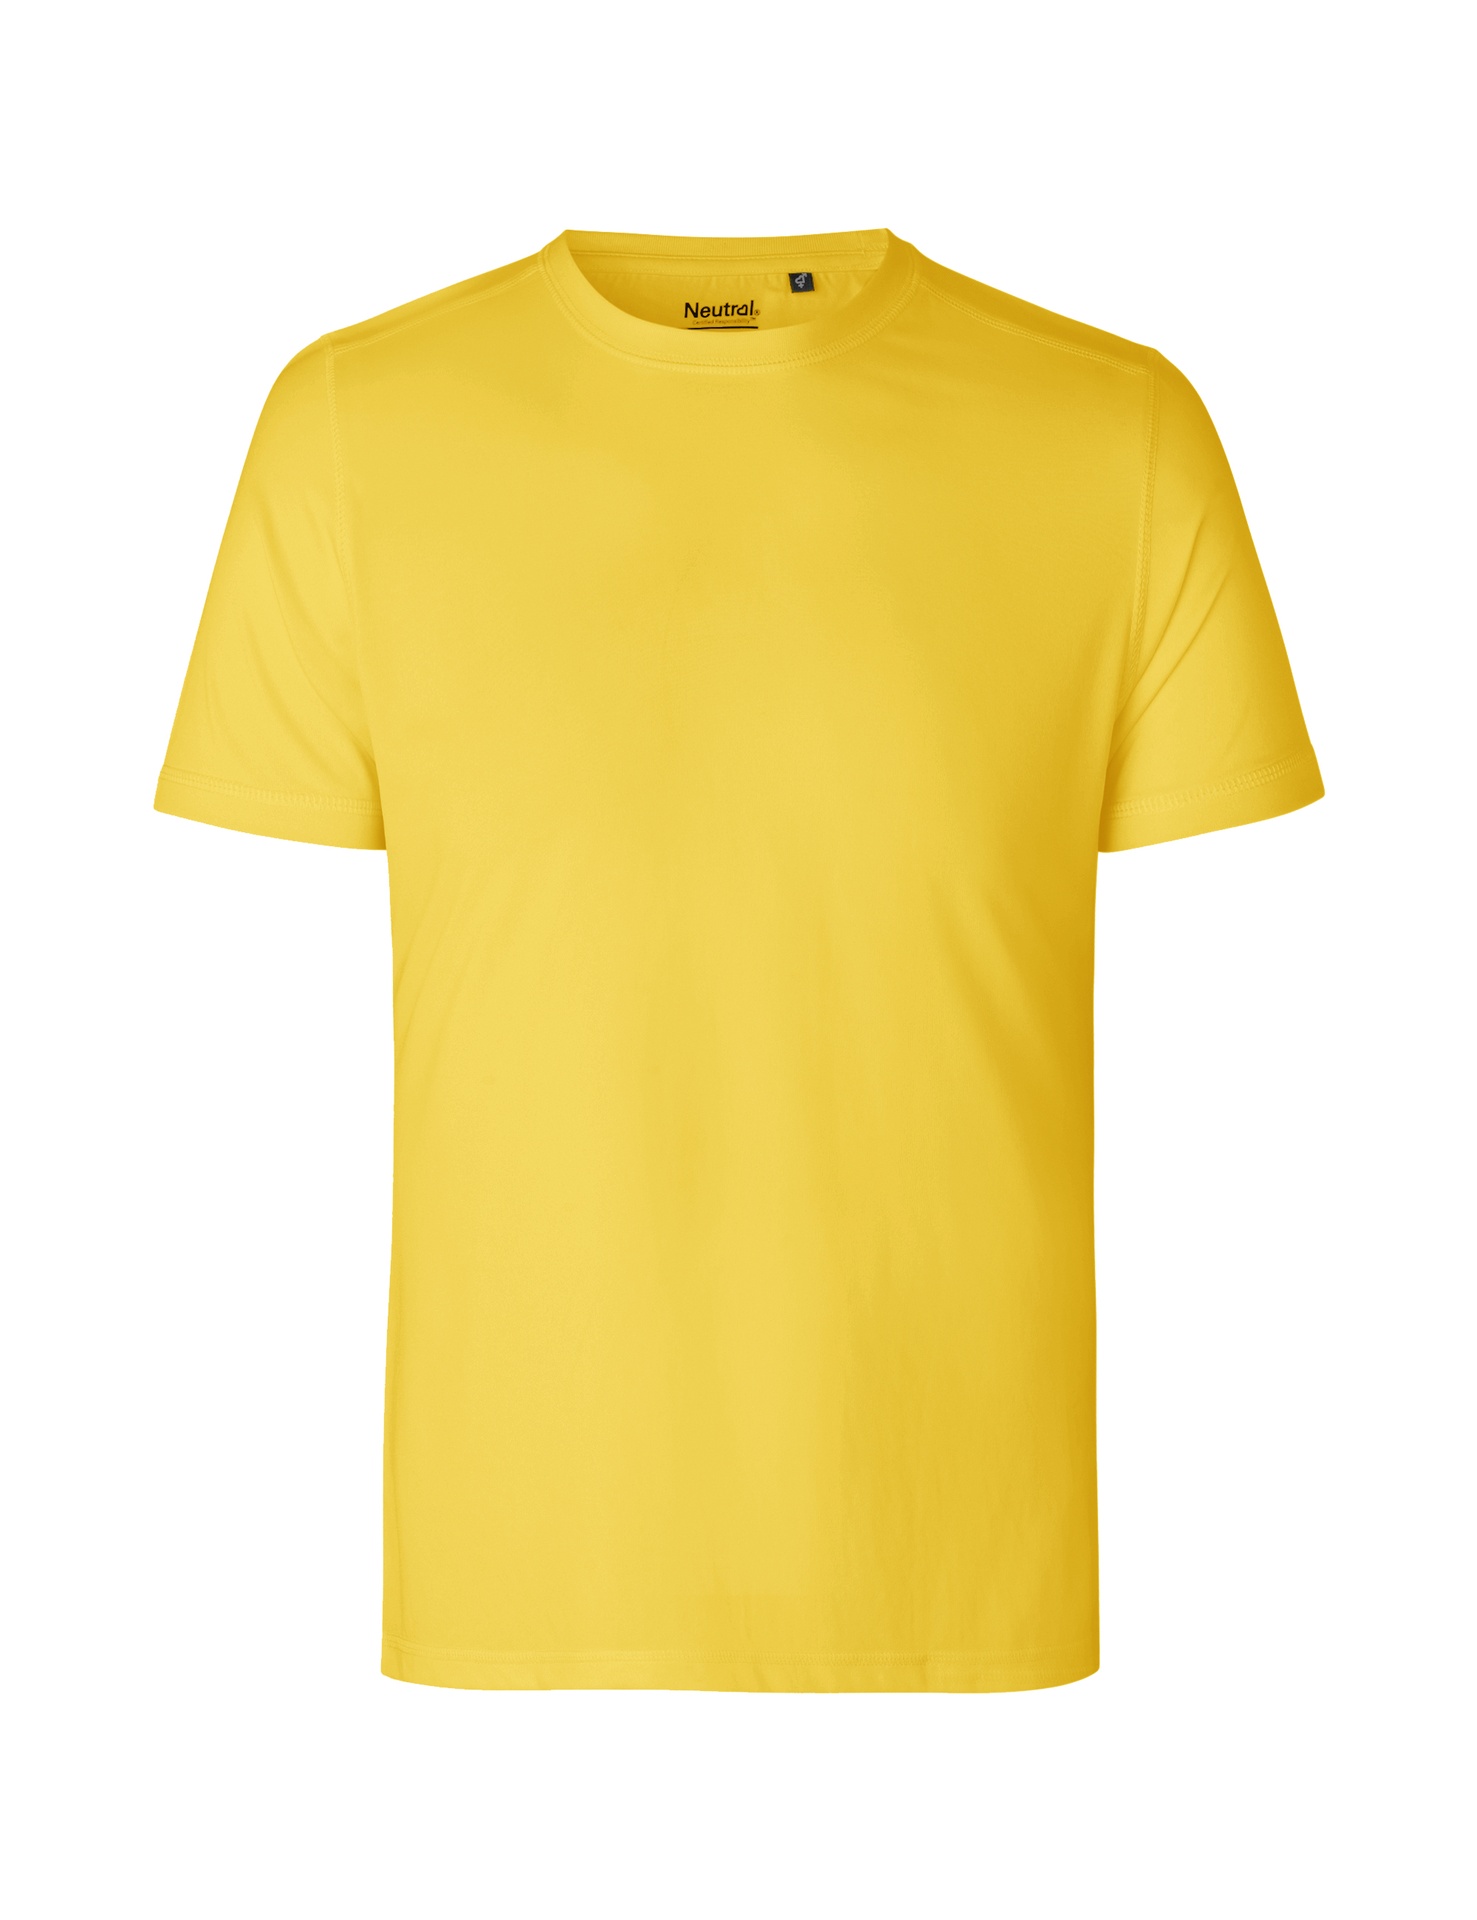 [PR/03817] Recycled Performance T-Shirt (Yellow 98, XL)